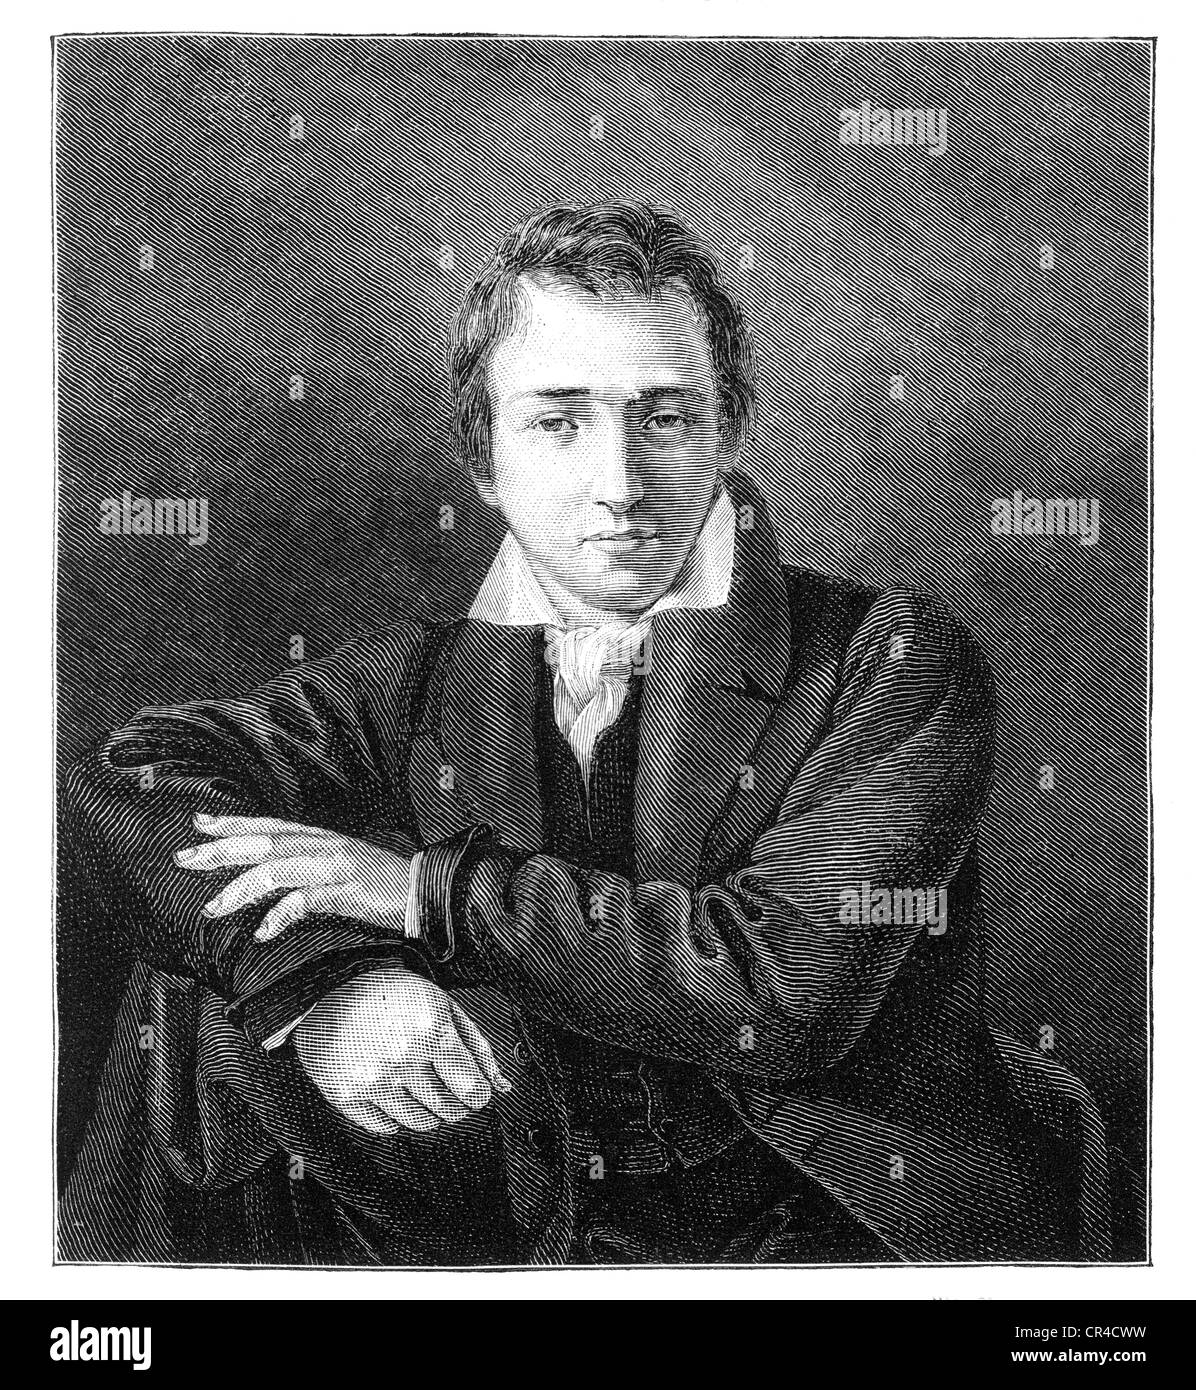 Christian Johann Heinrich Heine (1797 - 1856), poet, writer, steel engraving according to an image by M. Oppenheim Stock Photo